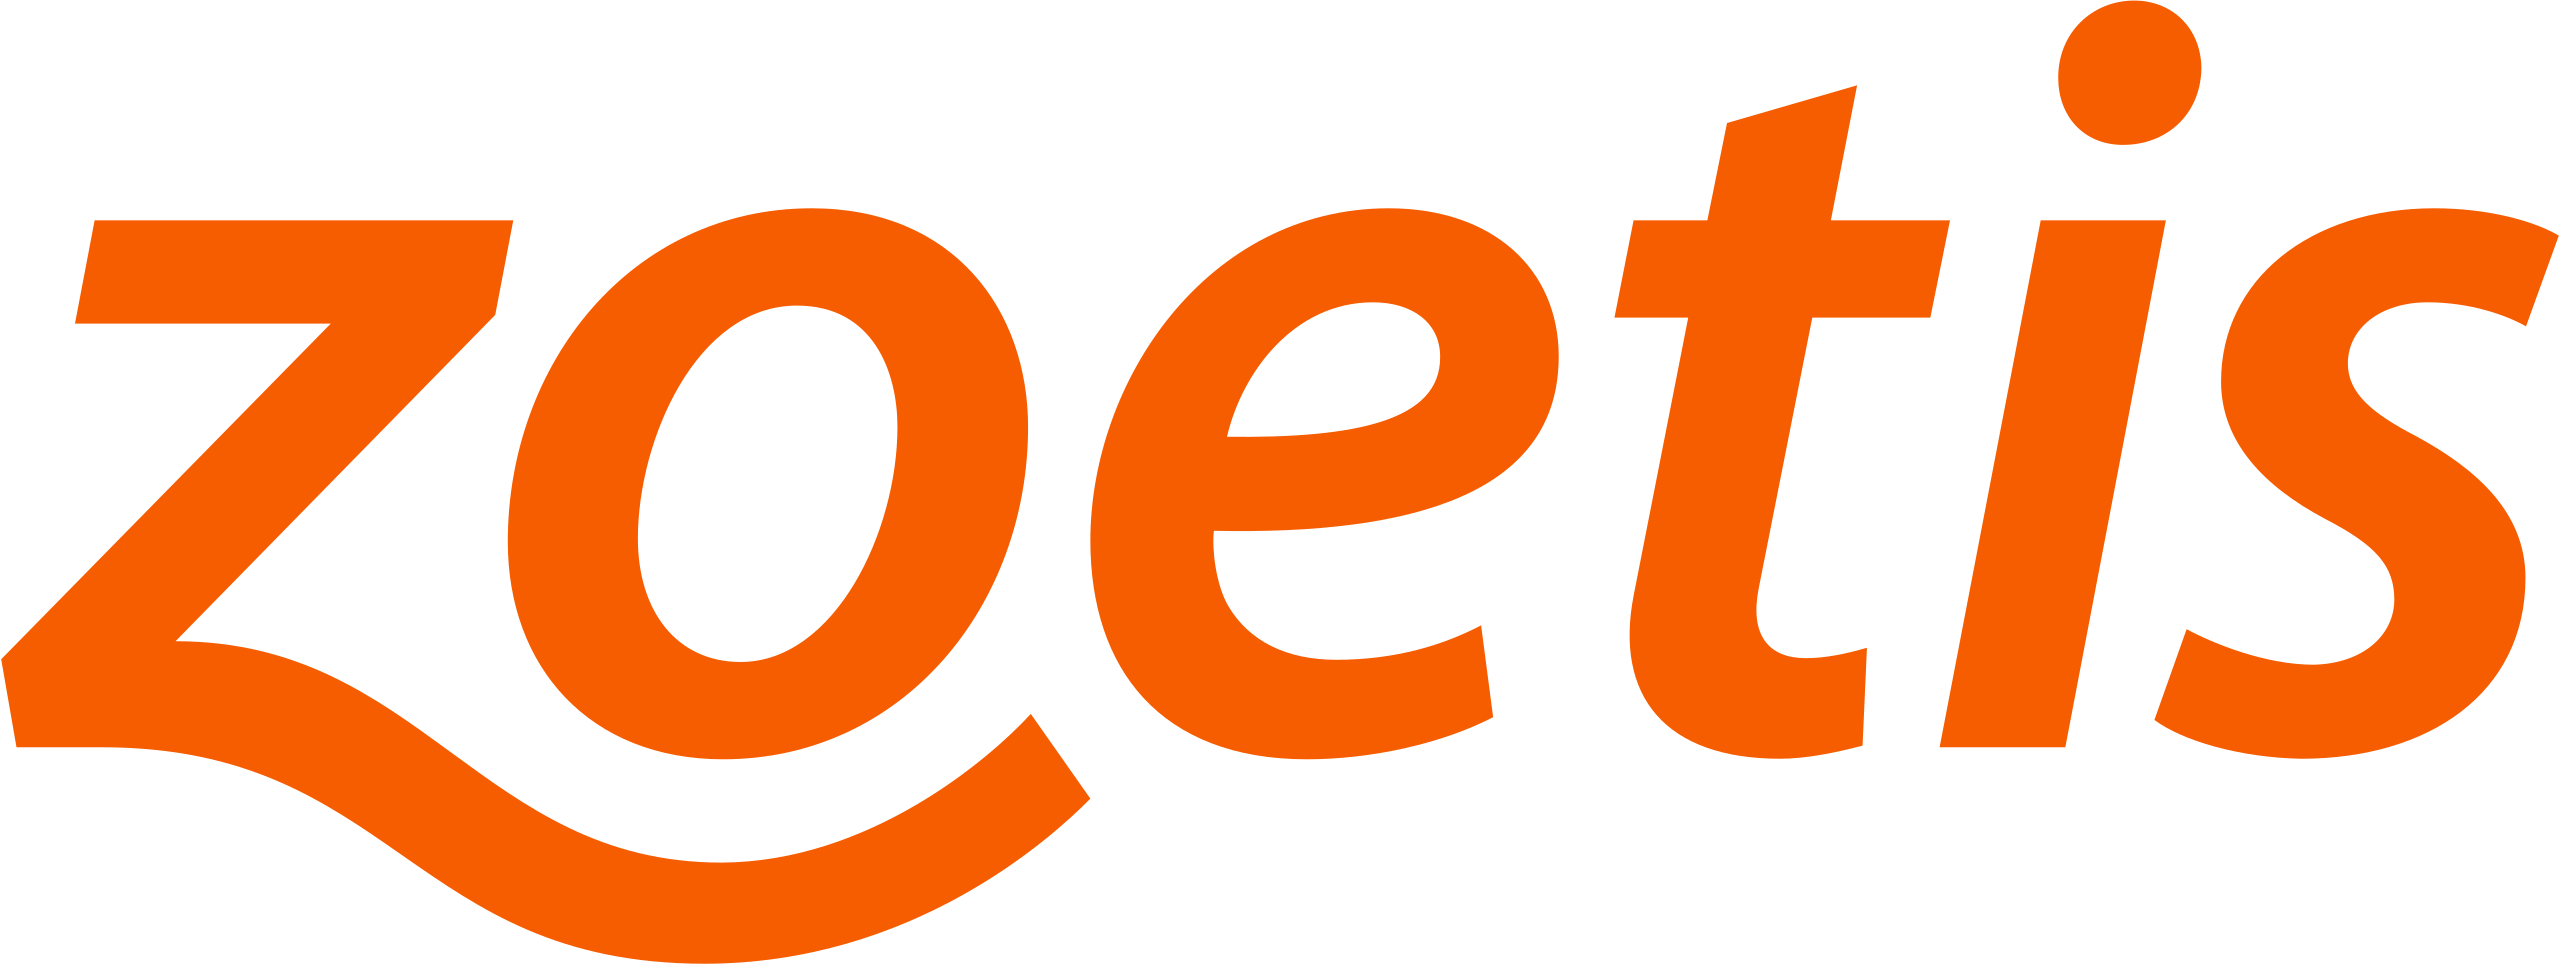 Zoetis_logo.svg